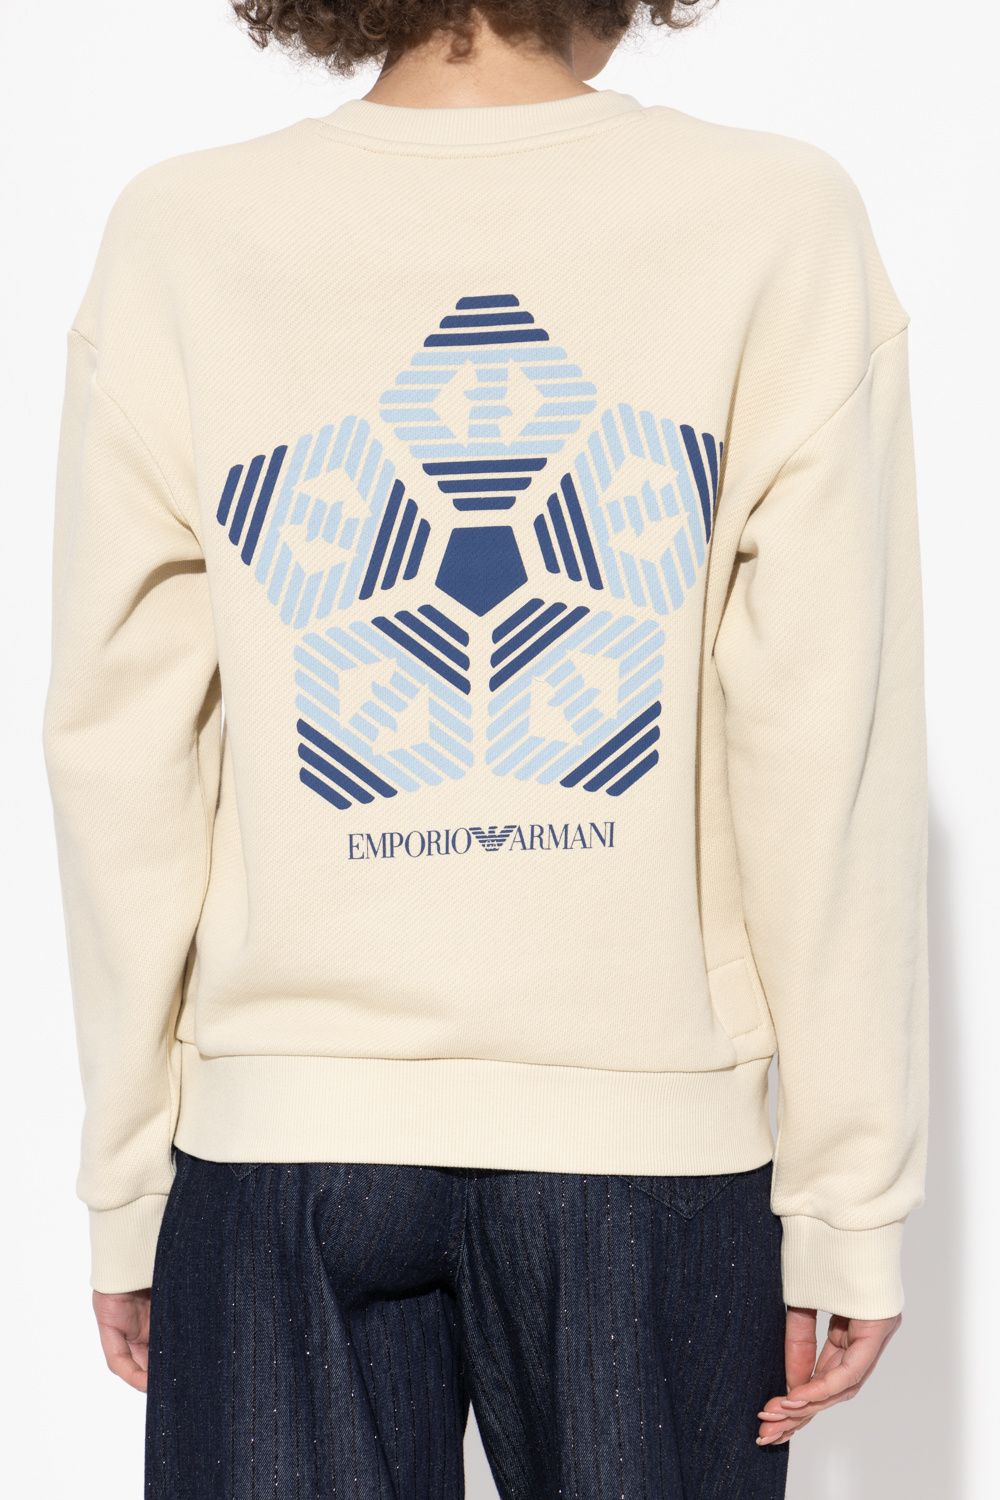 Emporio armani logo-underband Sweatshirt with logo